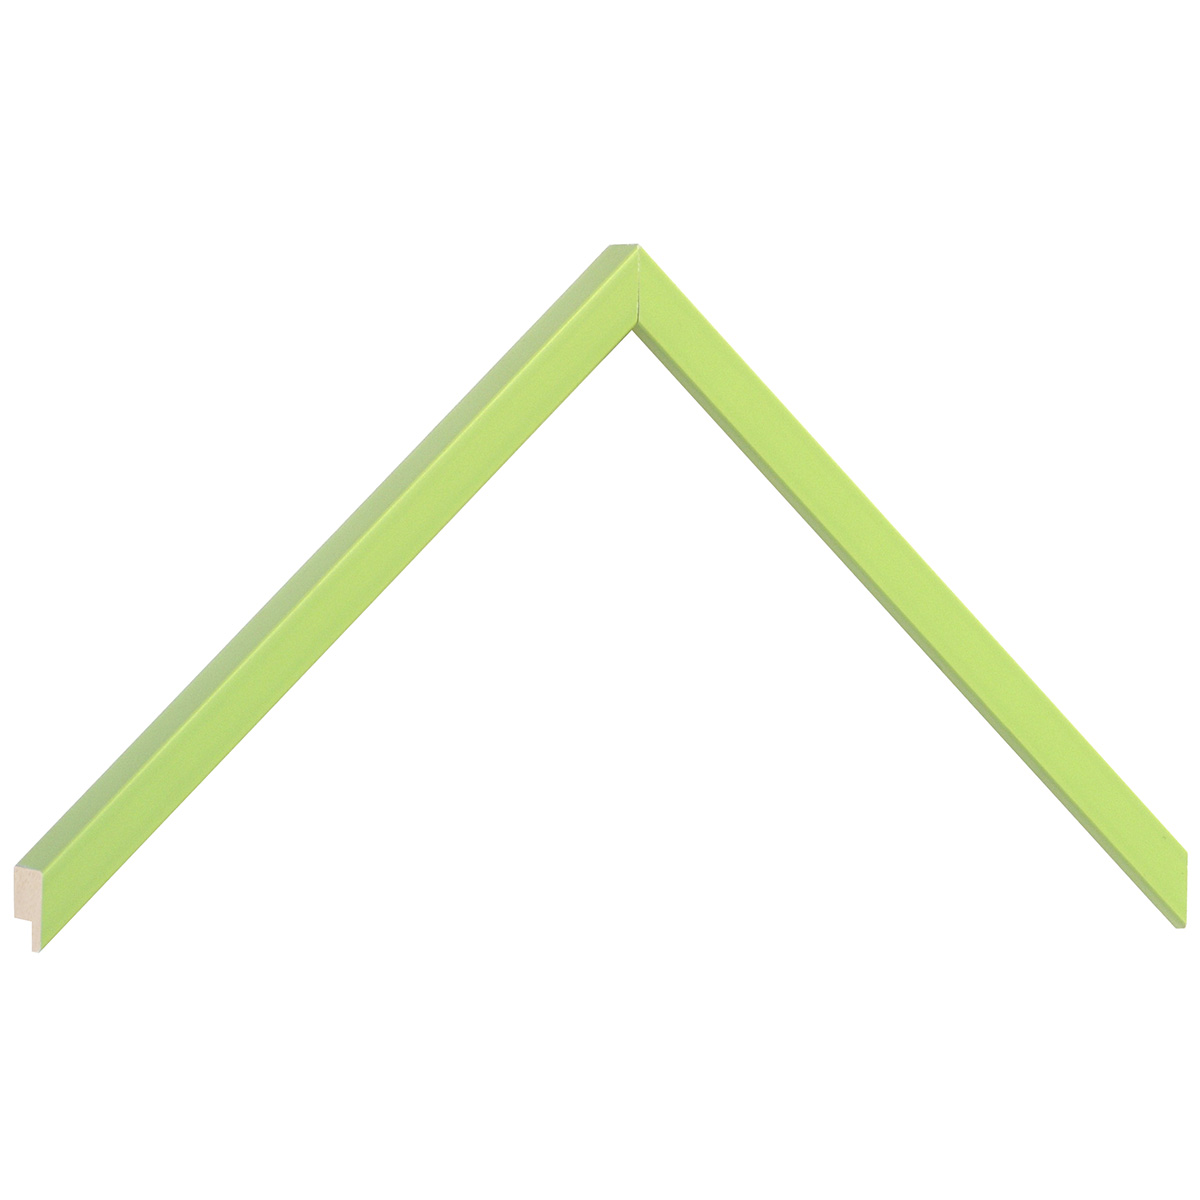 Profil ramin plat 10 mm - finisaj mat - culoare verde deschis - Mostră